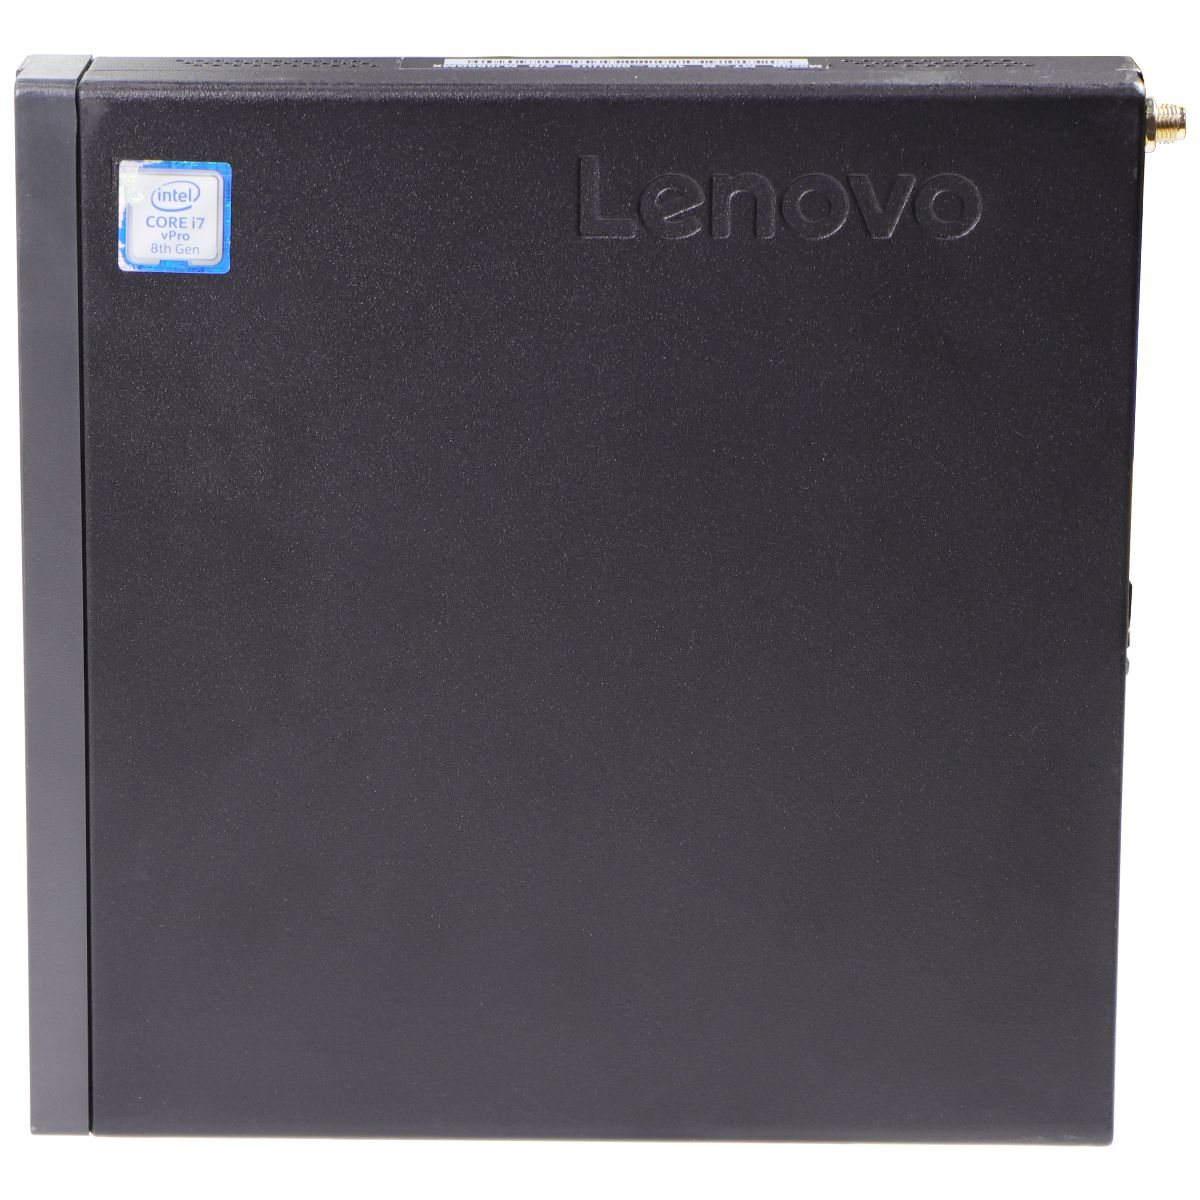 Lenovo Thinkcentre M920Q Desktop 000QUS i7-8700T / 256GB / 8GB RAM / 10 Pro PC Desktops & All-In-Ones Lenovo    - Simple Cell Bulk Wholesale Pricing - USA Seller